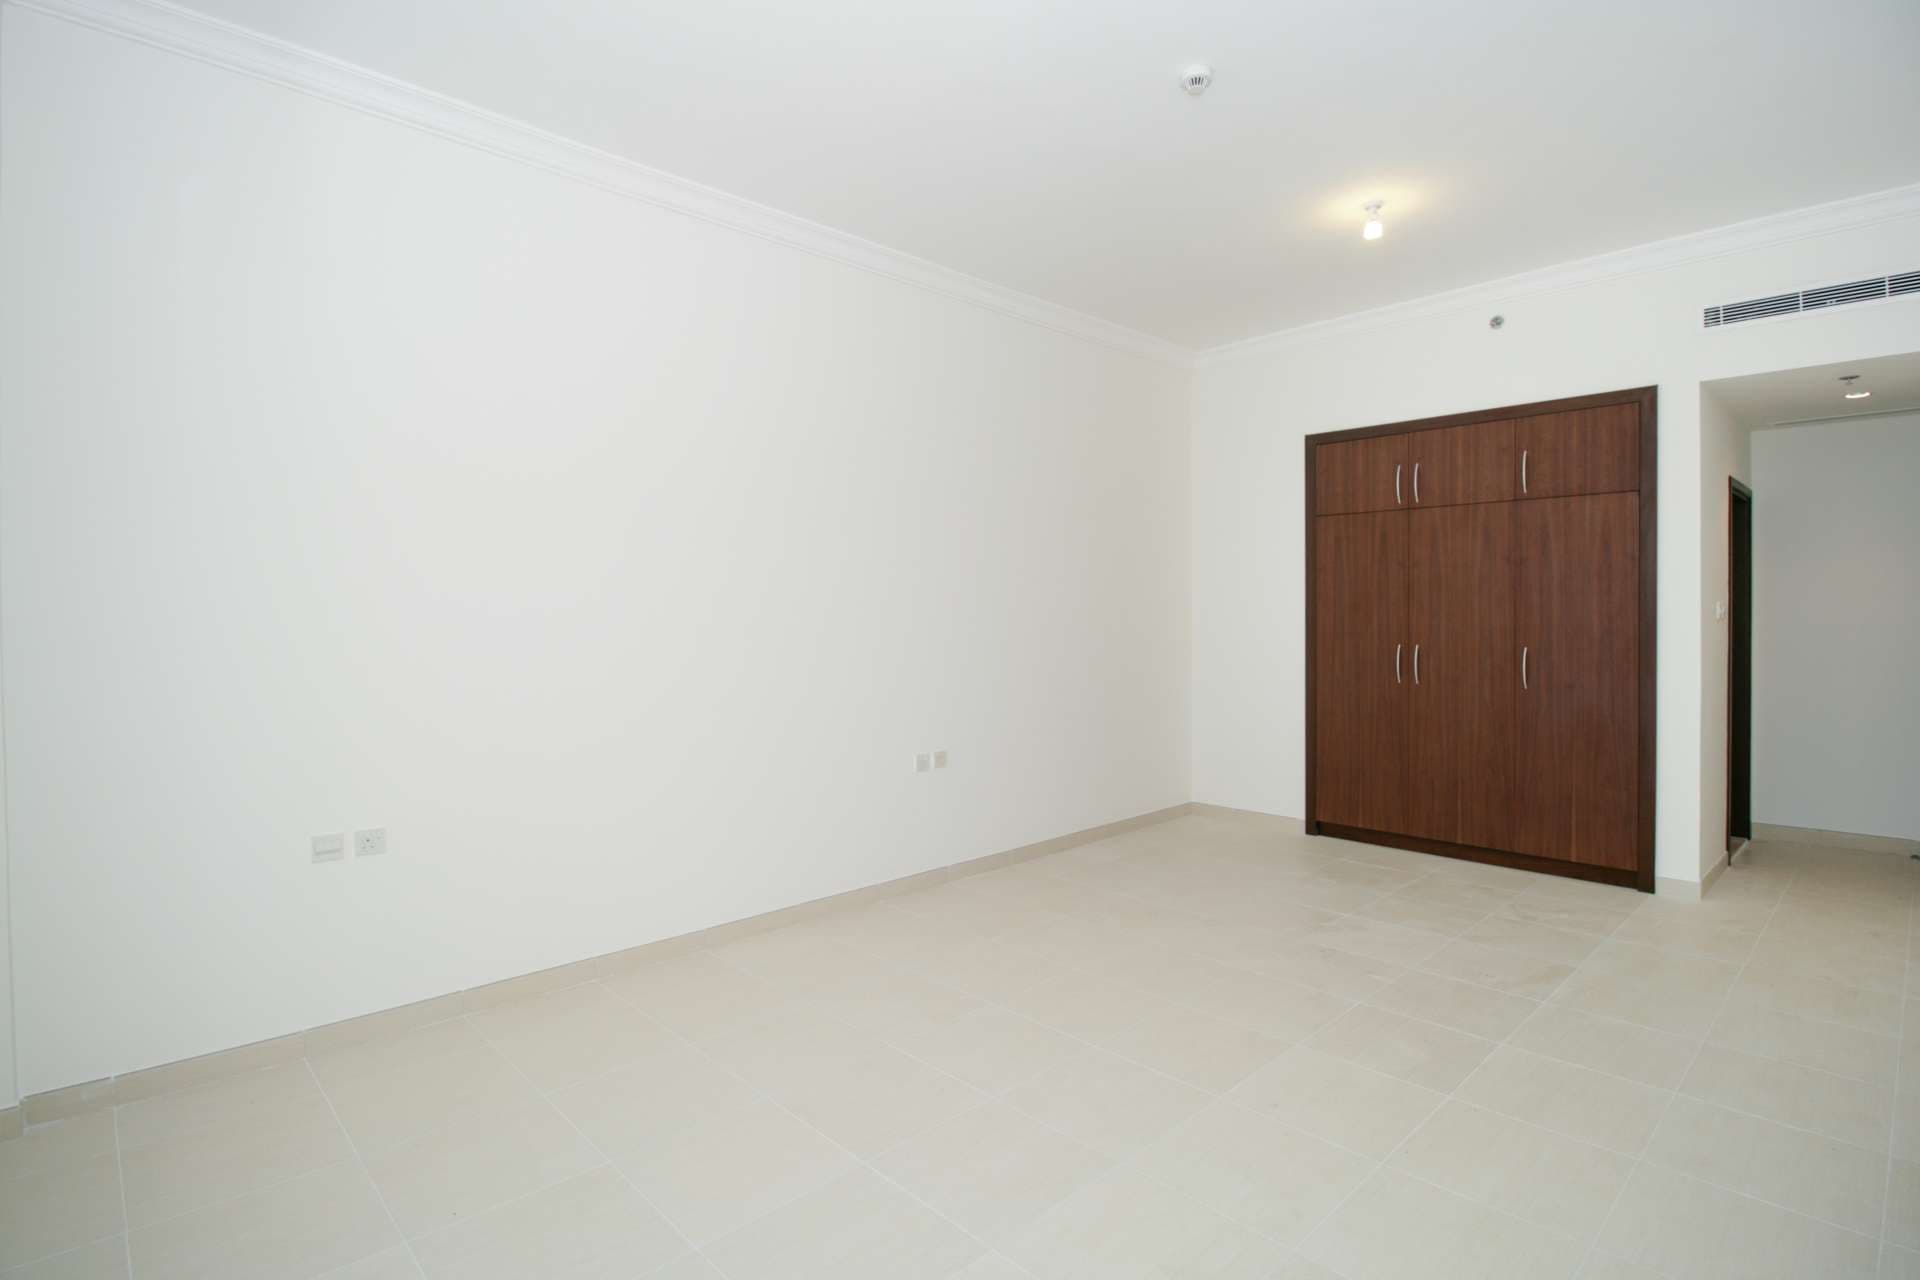 2 Bedroom Apartment For Sale Sarai Apartments Lp04852 476f8b1dfbb12c0.jpg